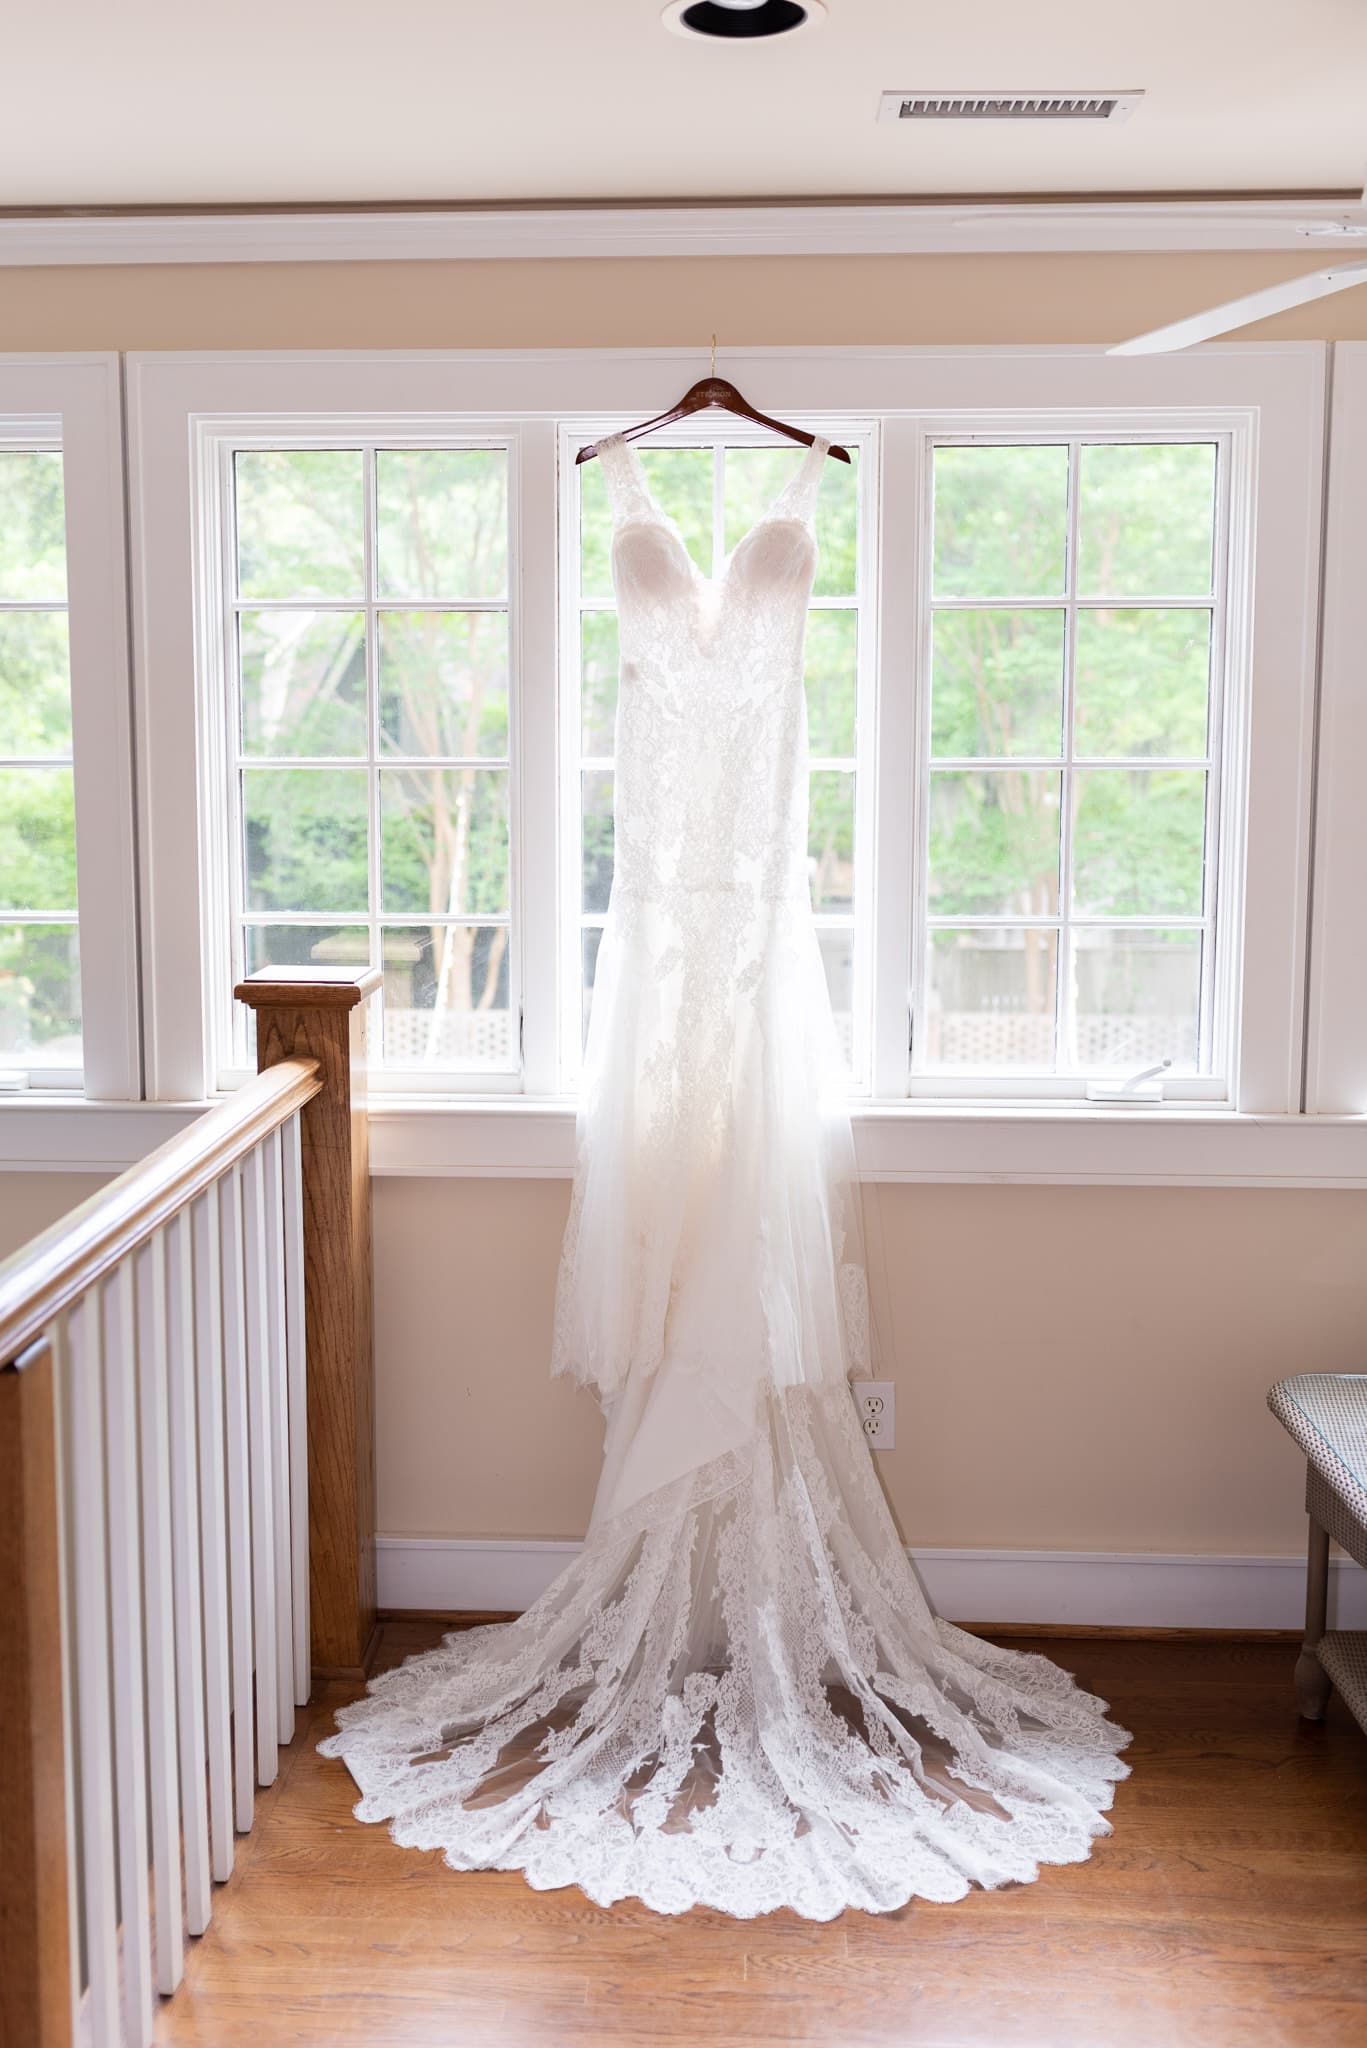 Wedding Dress hanging in the window - Brookgreen Gardens